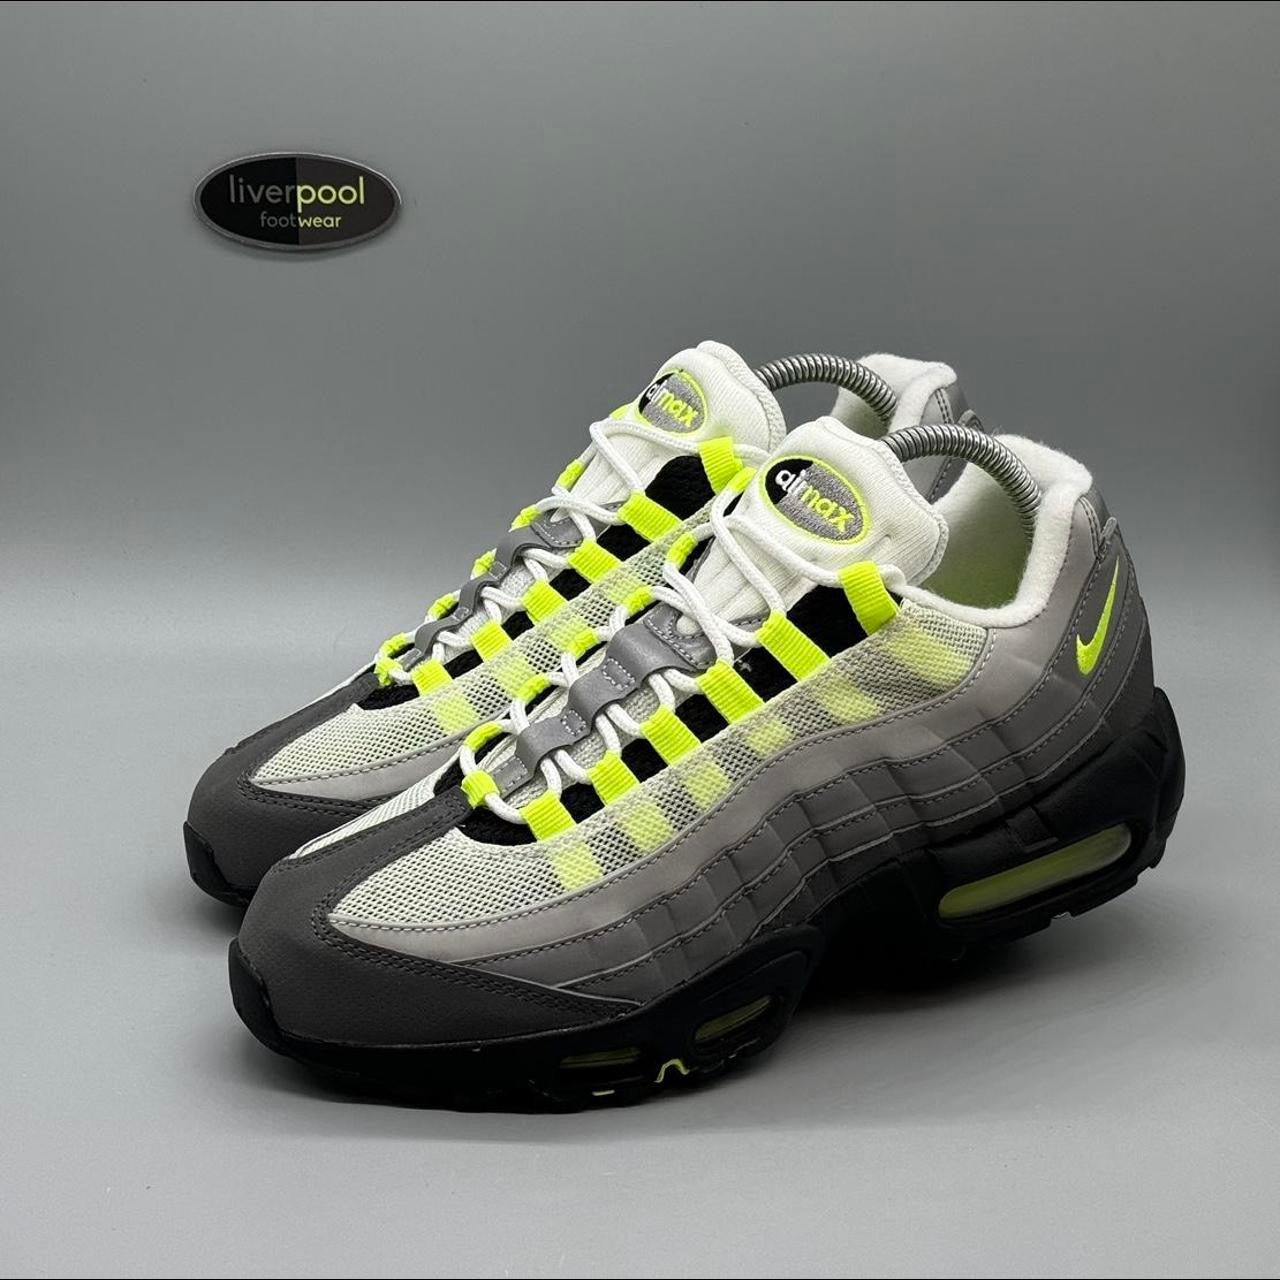 Nike Air Max 95 premium - Reflective neon